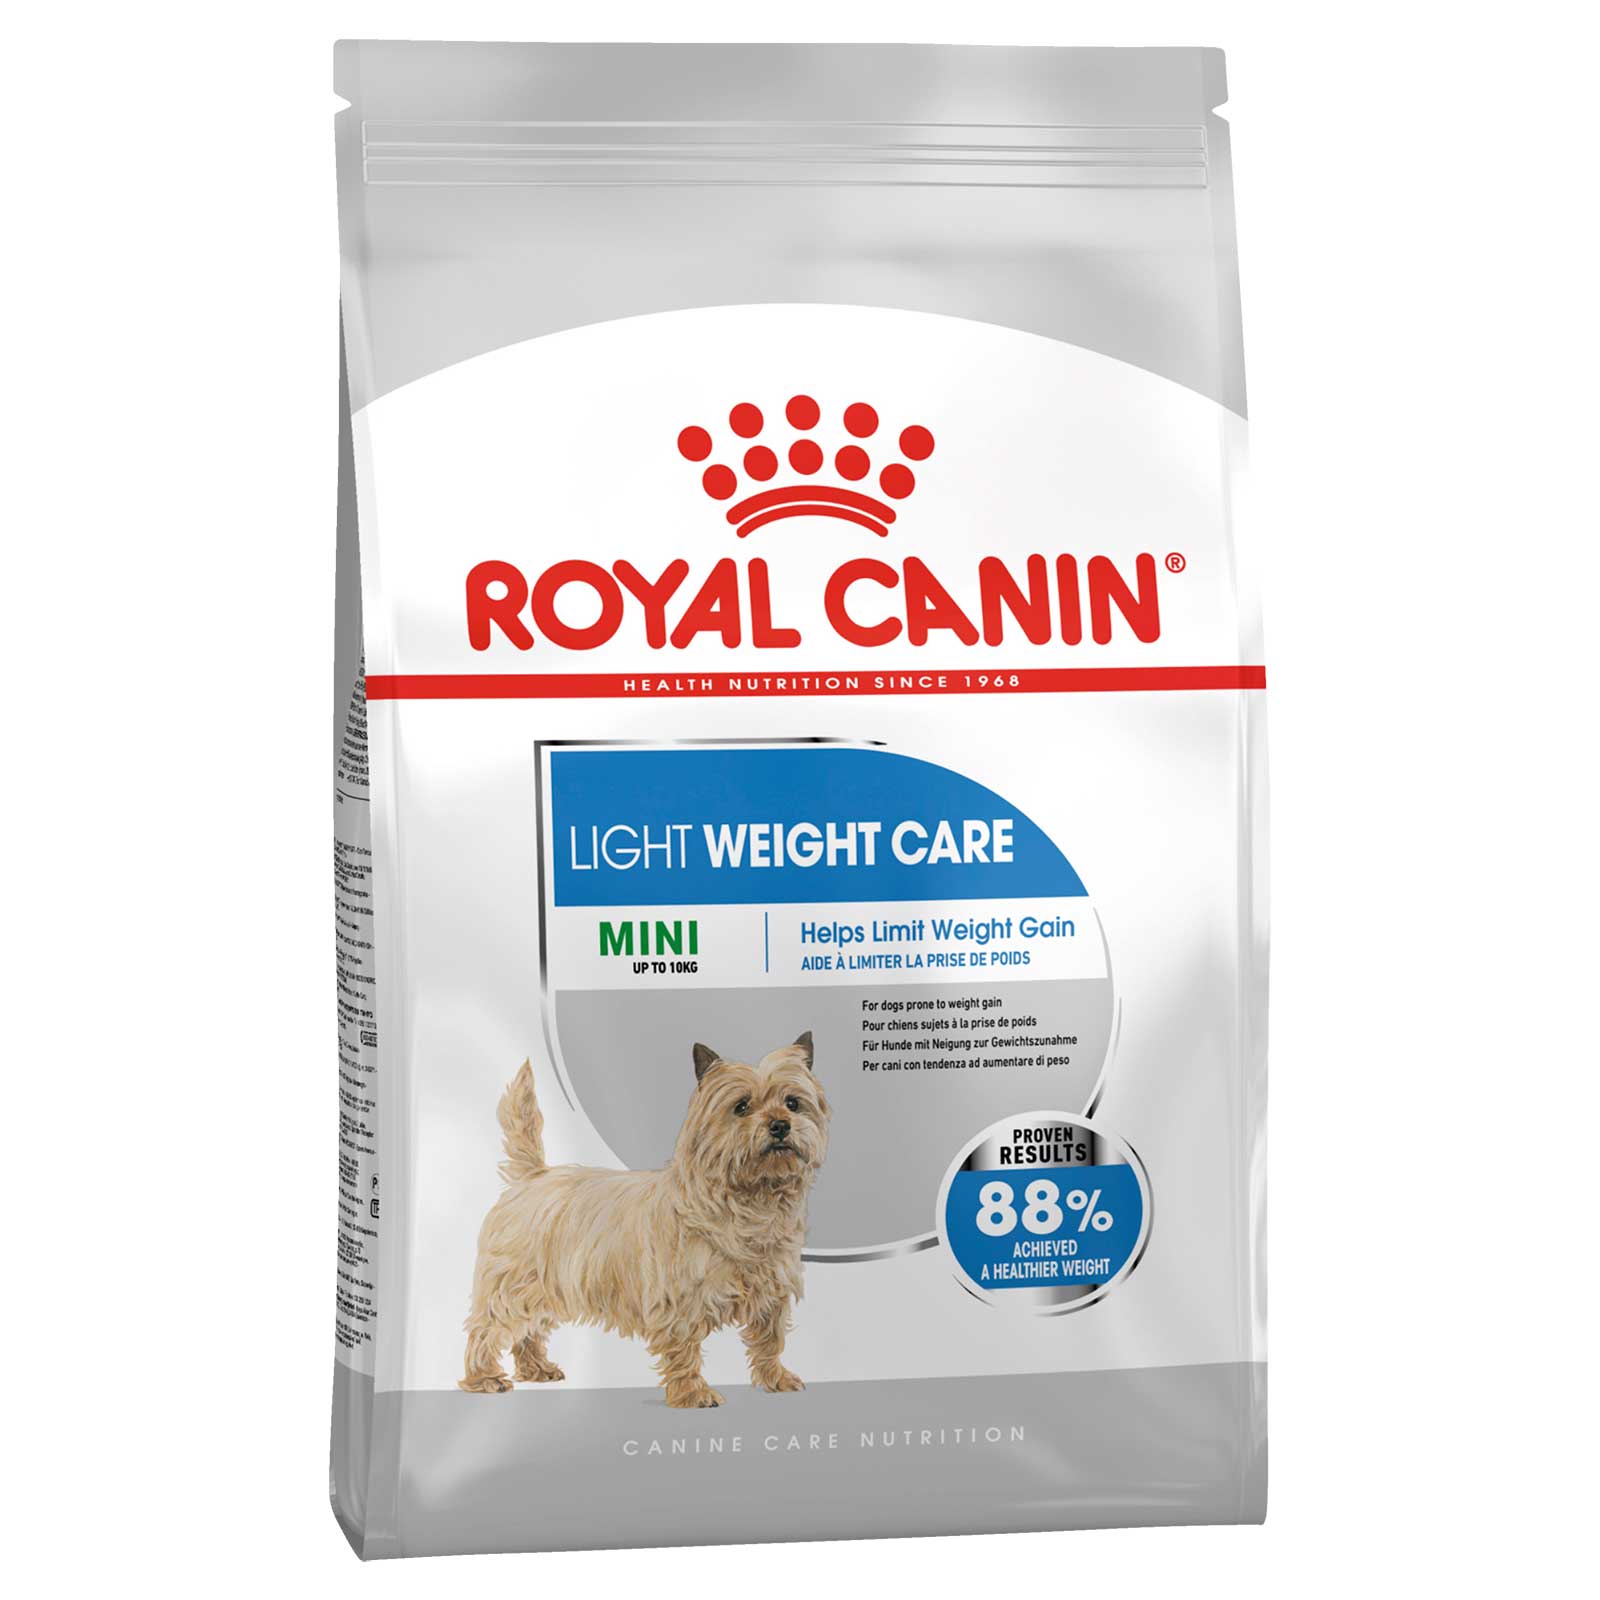 Royal Canin Dog Food Light Weight Care Mini